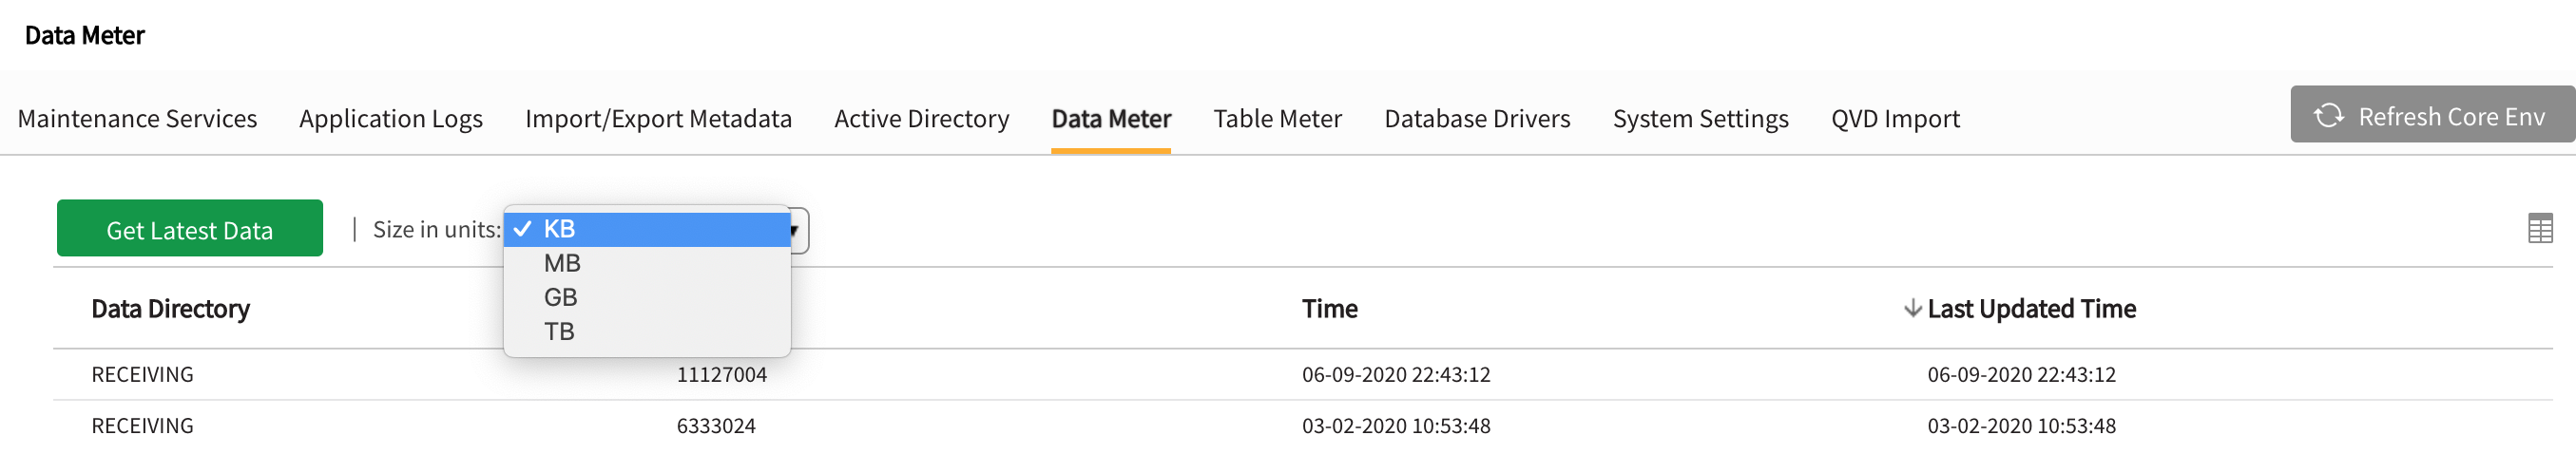 data meter displays most recent data usage